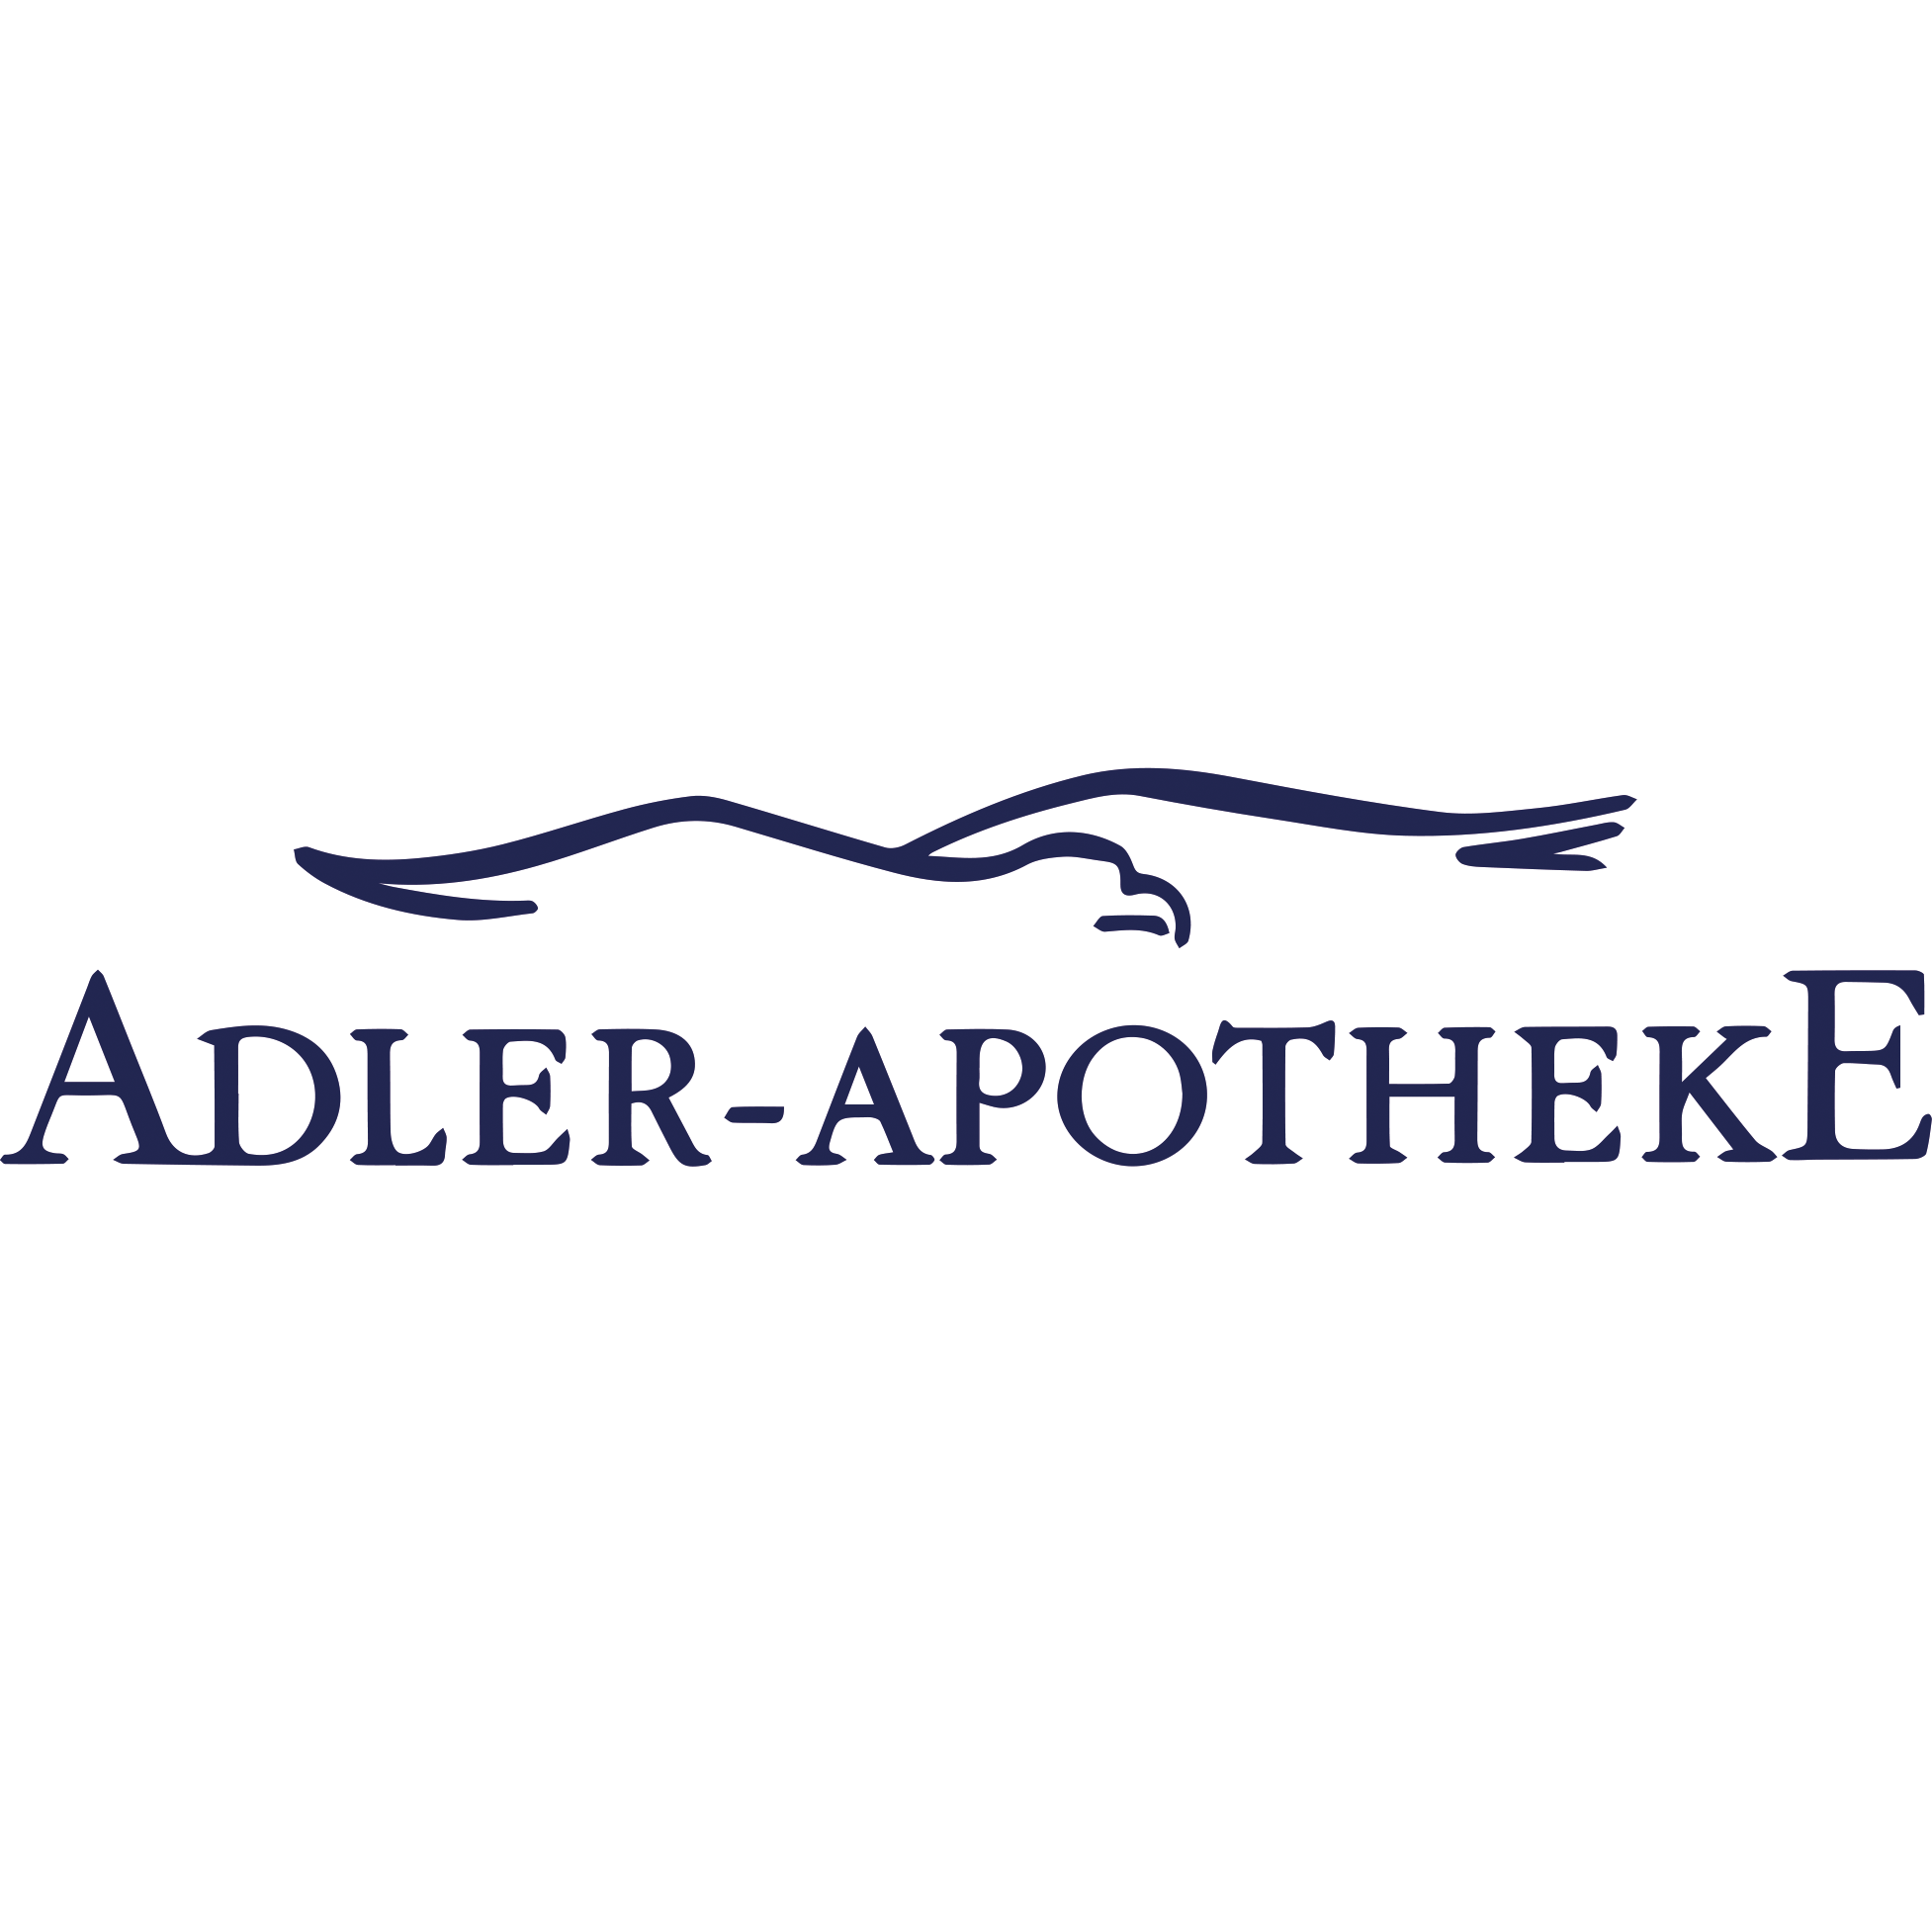 Adler-Apotheke in Wörrstadt - Logo